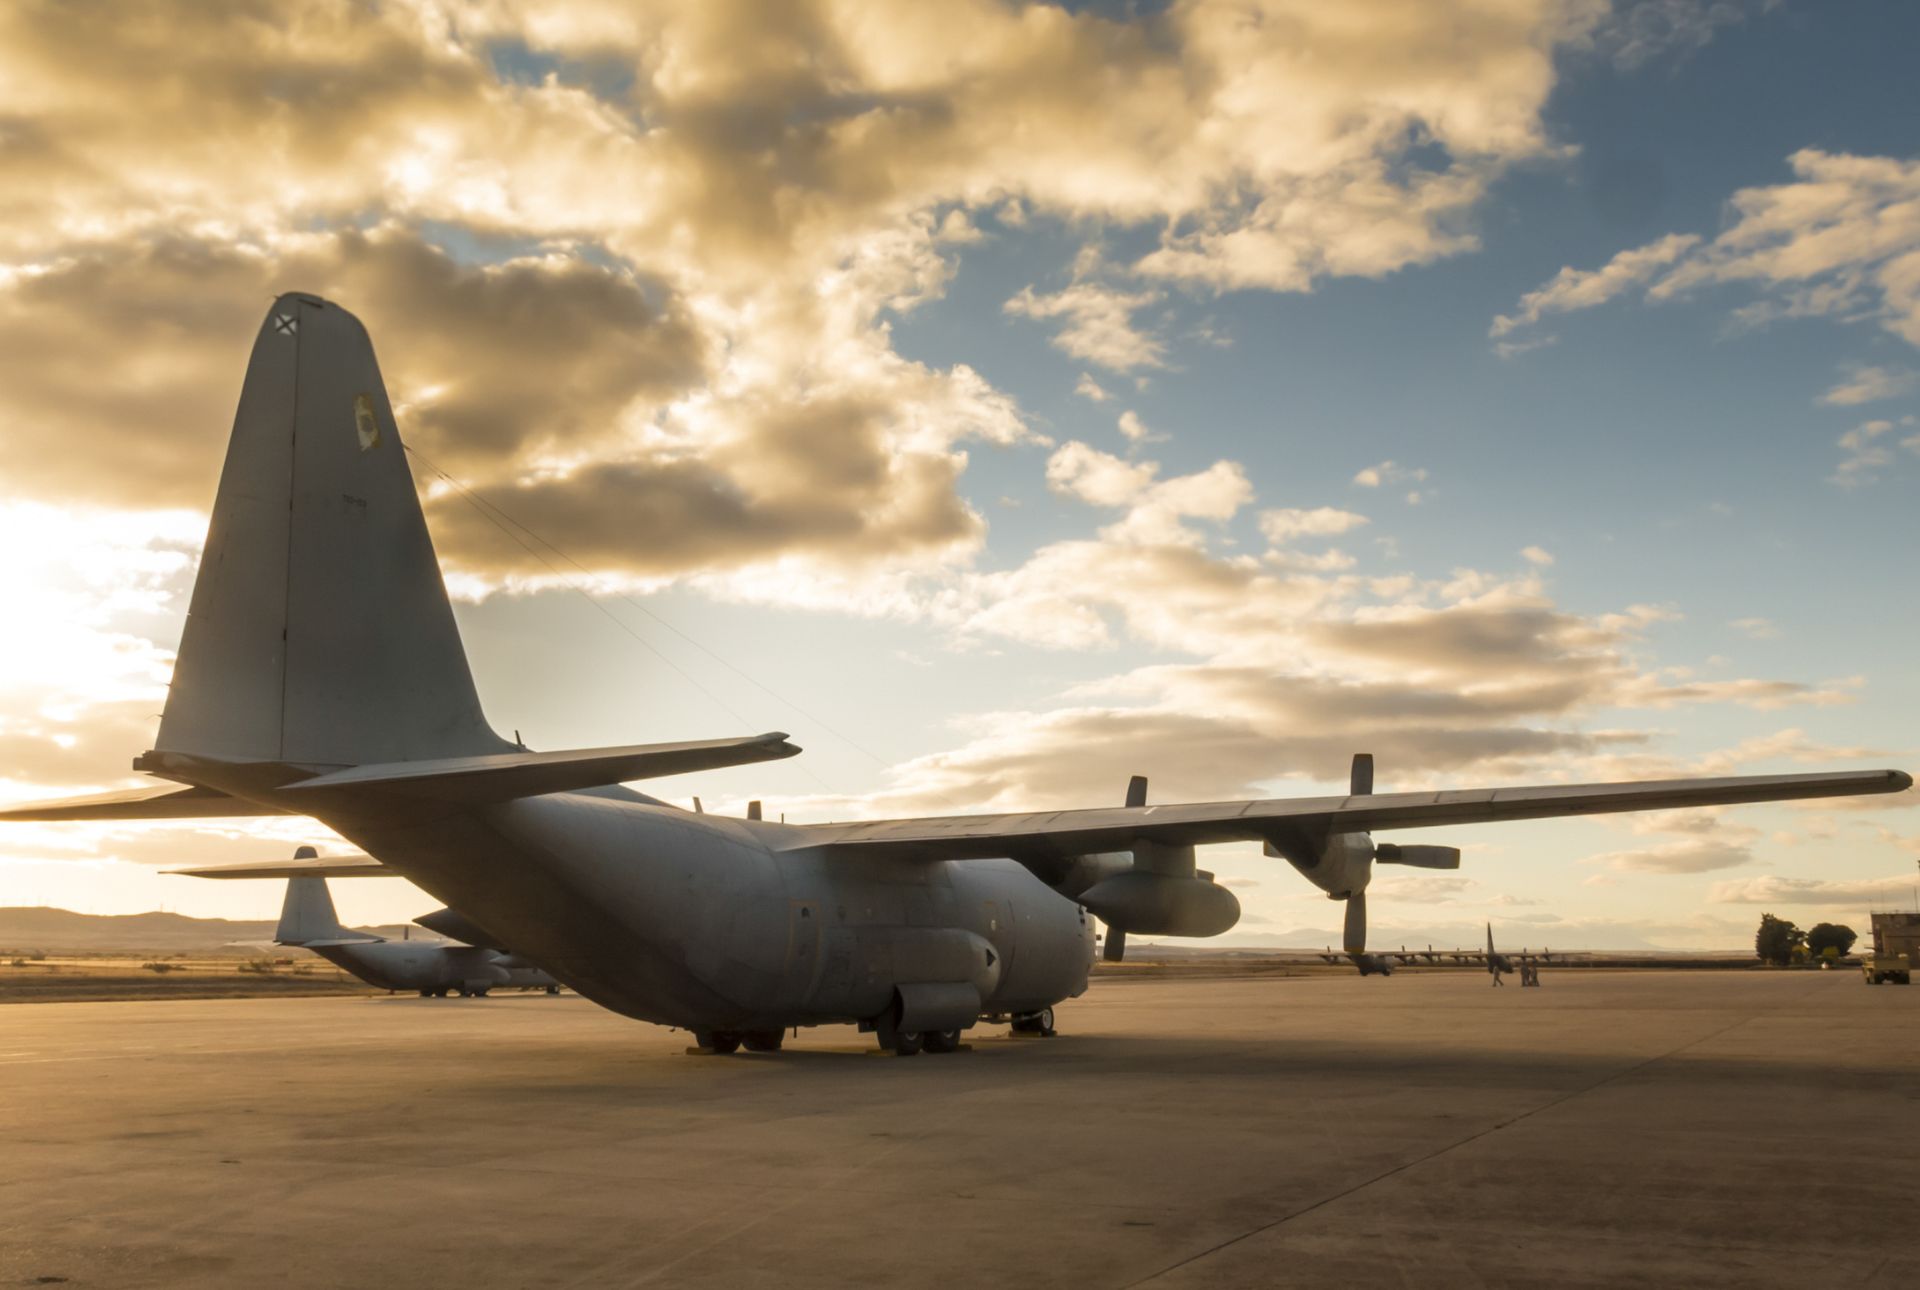 Lockheed Martin C-130 military aircraft parked on the tarmac